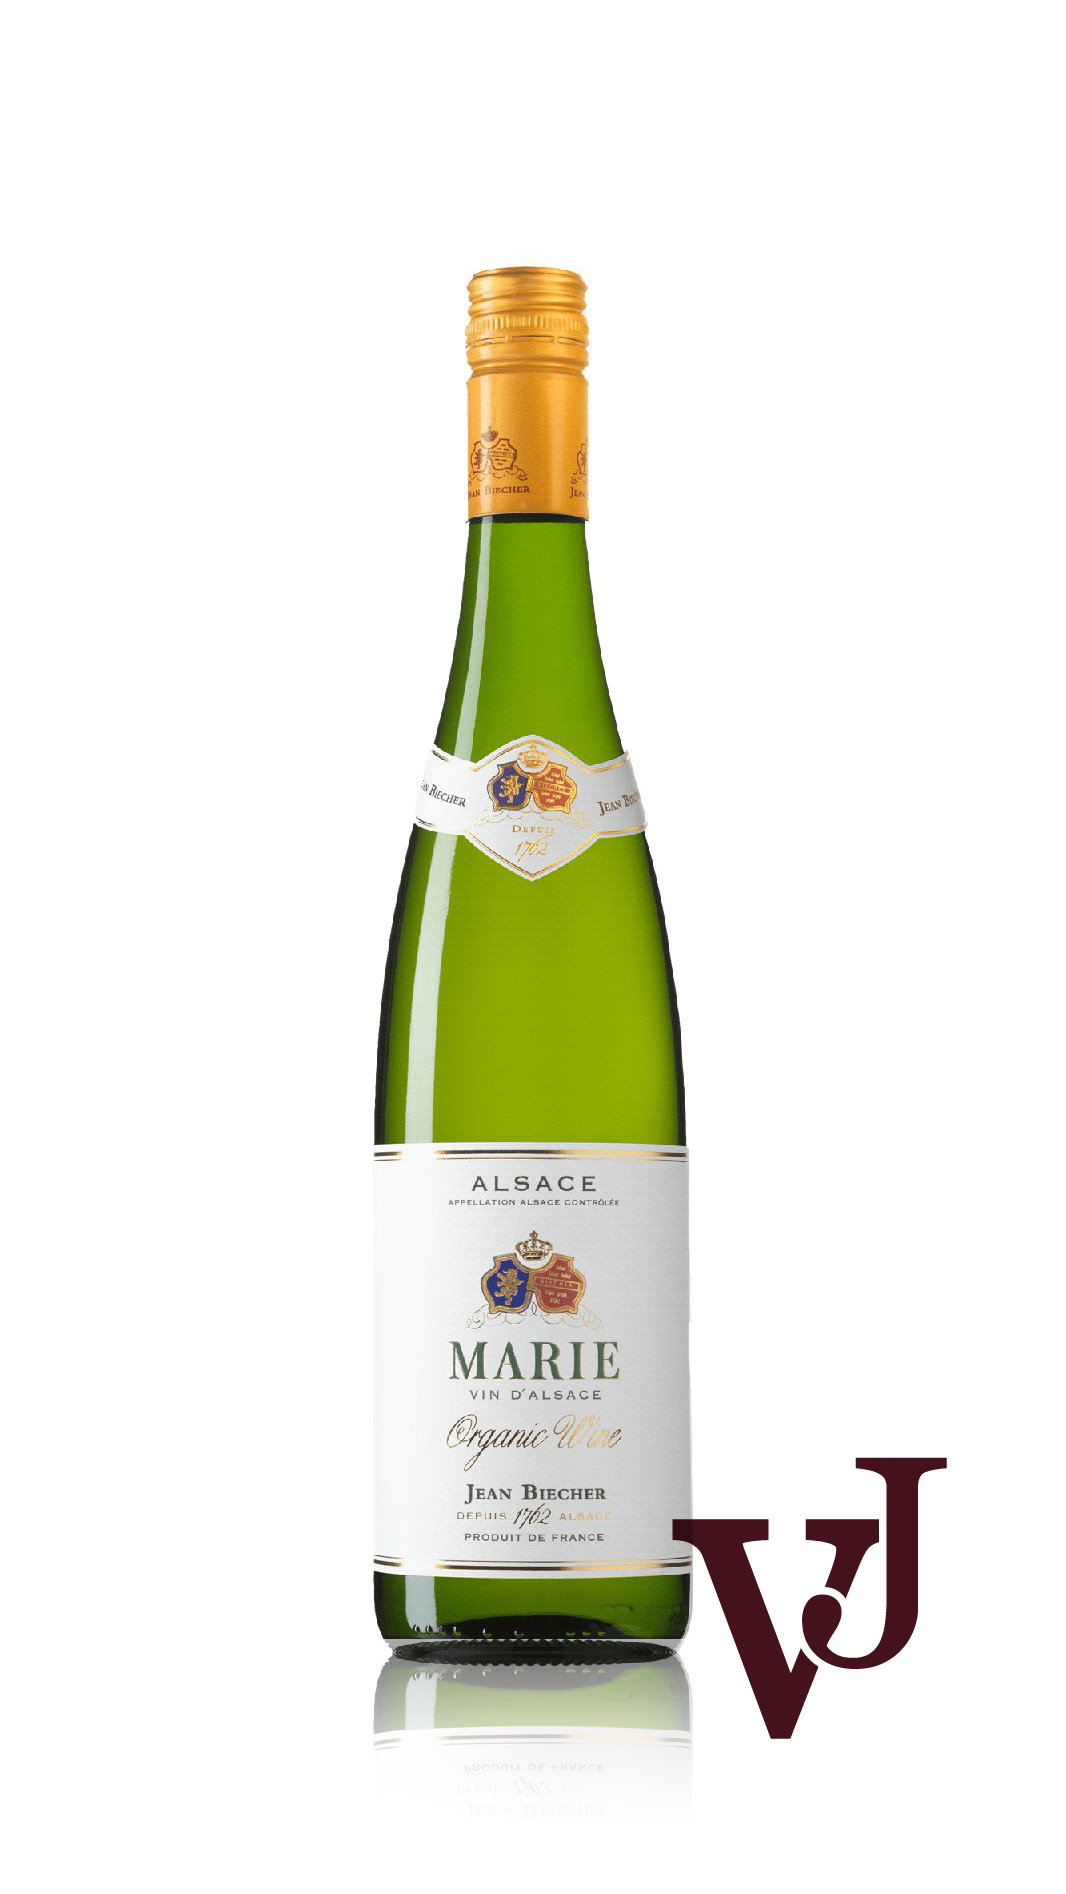 Vitt Vin - Marie d'Alsace artikel nummer 1224401 från producenten Jean Biecher från området Frankrike - Vinjournalen.se